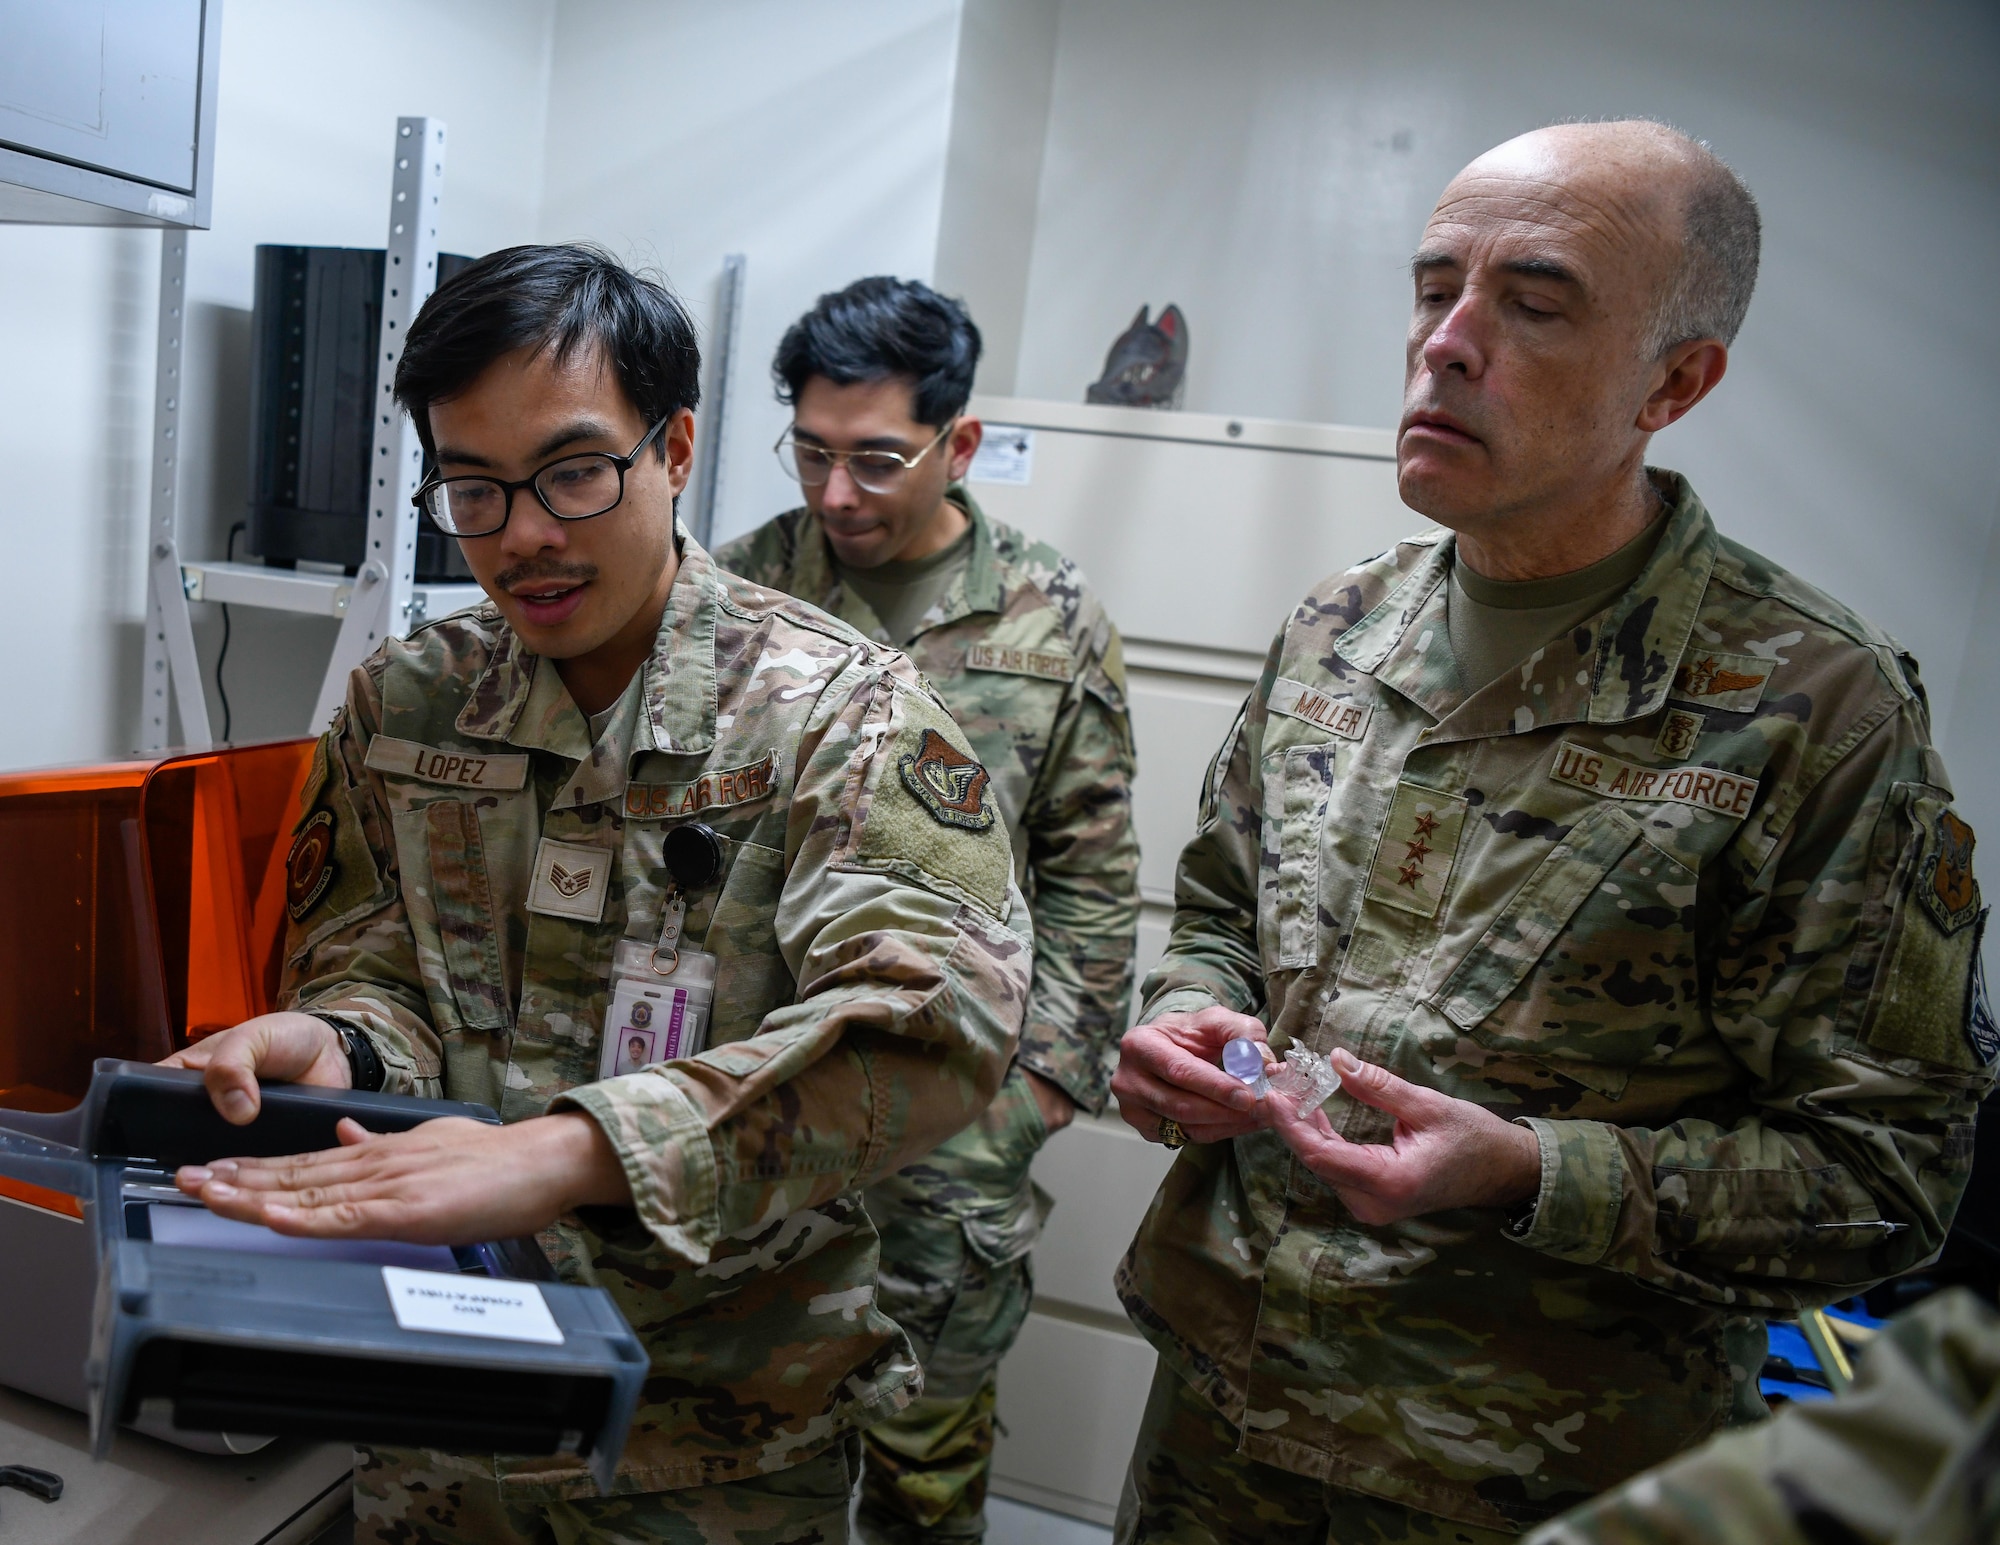 SSgt Lopez shows Lt. Gen. Miller dental technology.